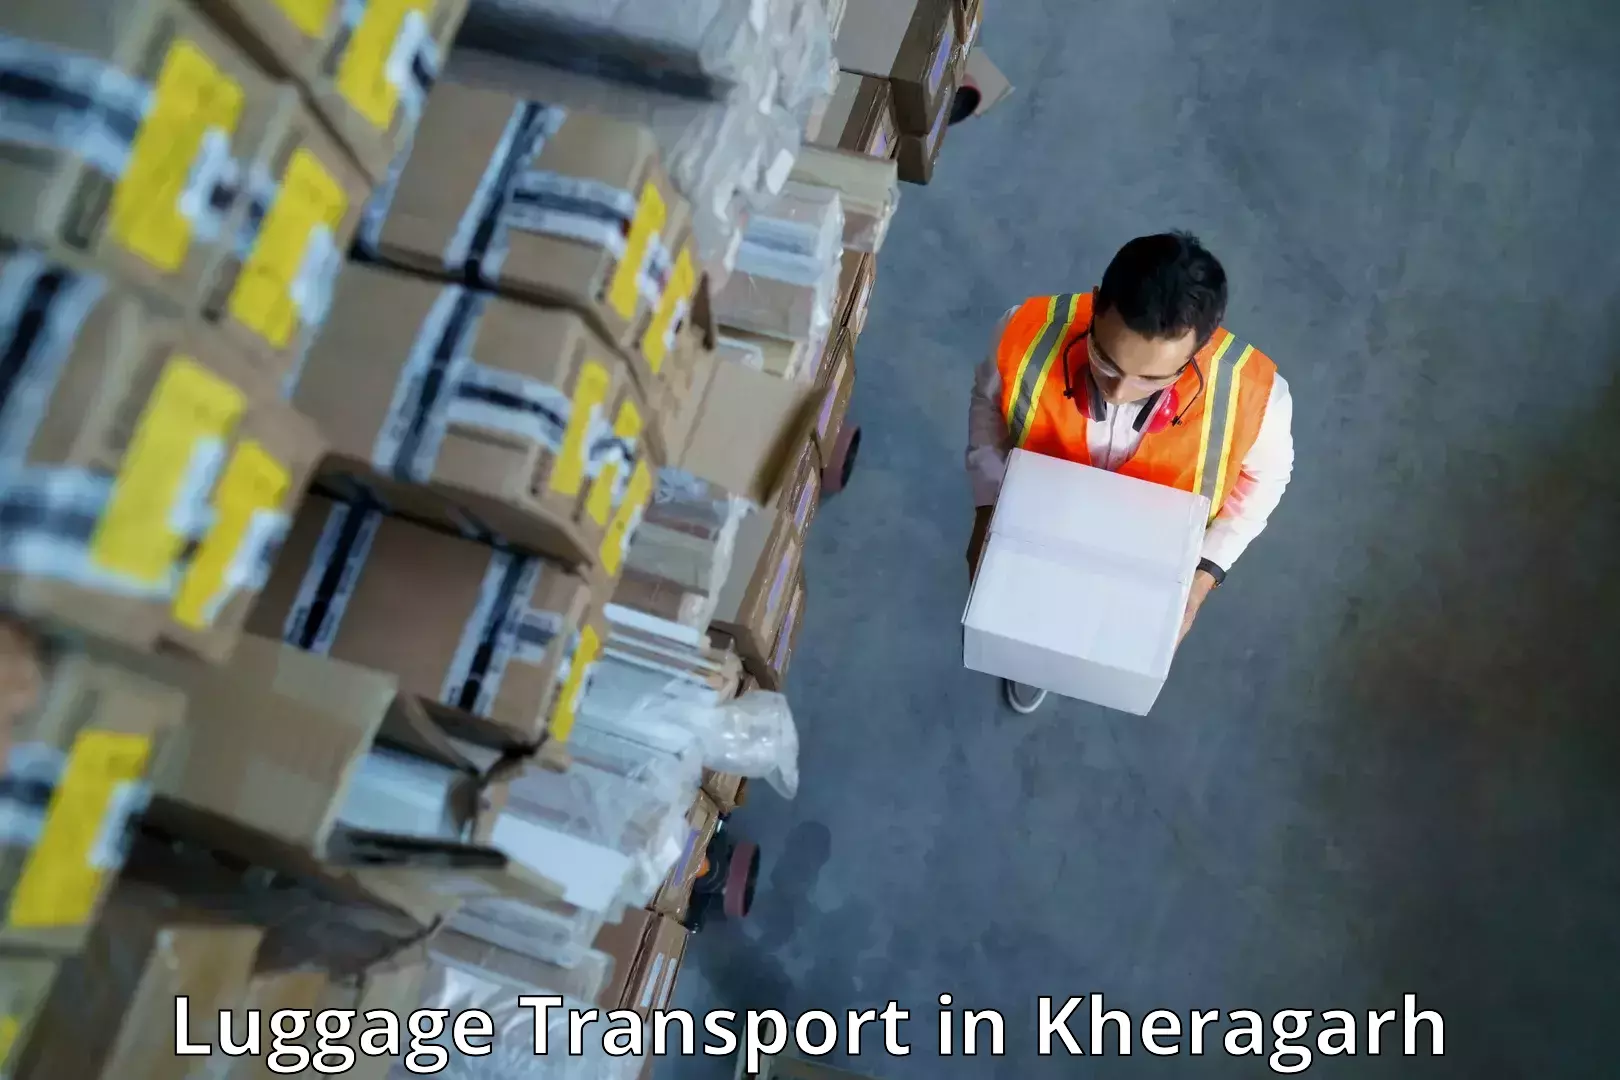 Luggage transport service in Kheragarh